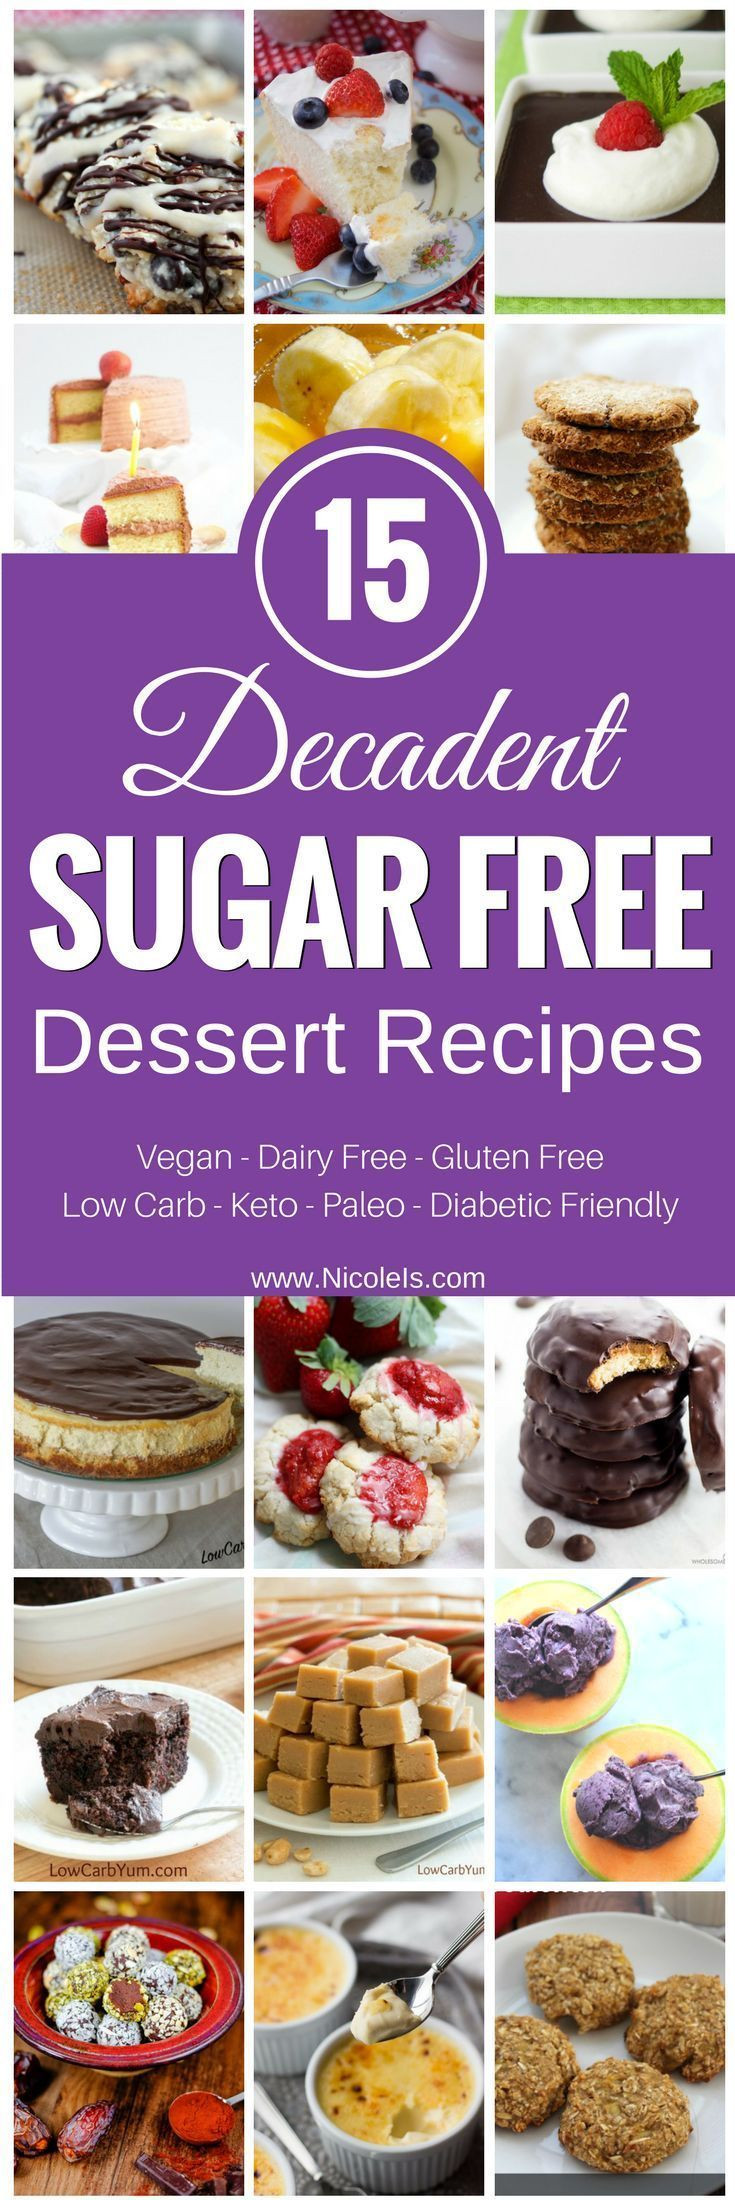 Sugar Free Desserts Recipes For Diabetics
 Best 25 Sugar free diabetic recipes ideas on Pinterest